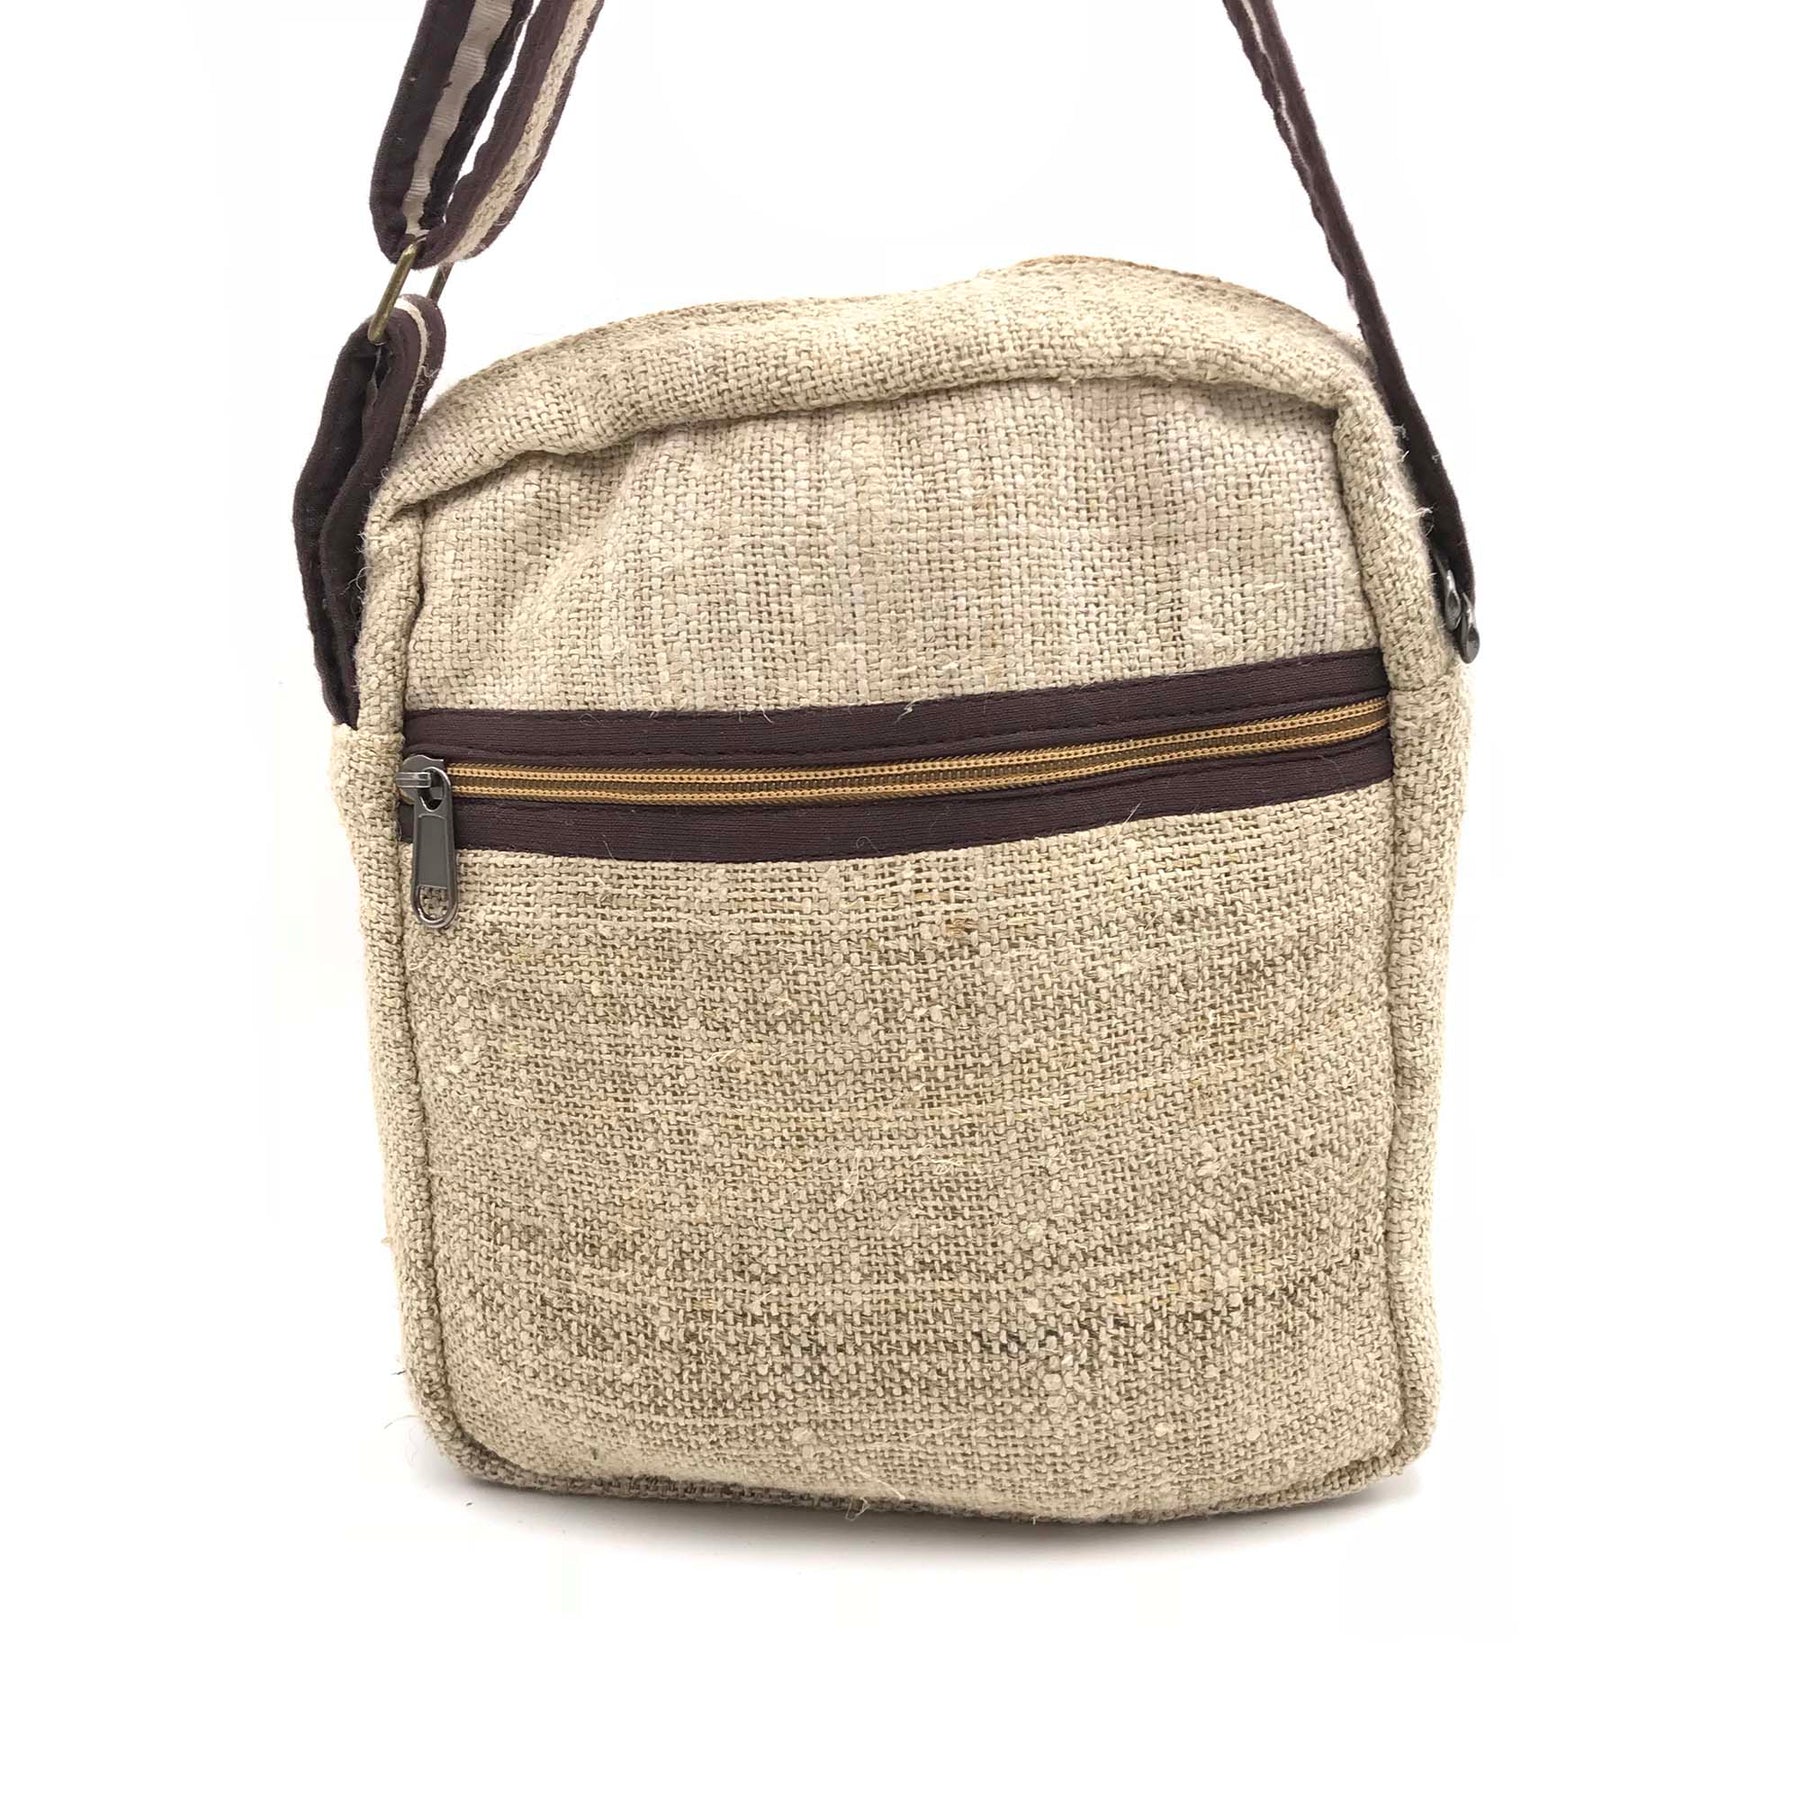 Buy Hemp Messenger Bag | 100% Pure Hemp | Organic and Eco-friendly ...